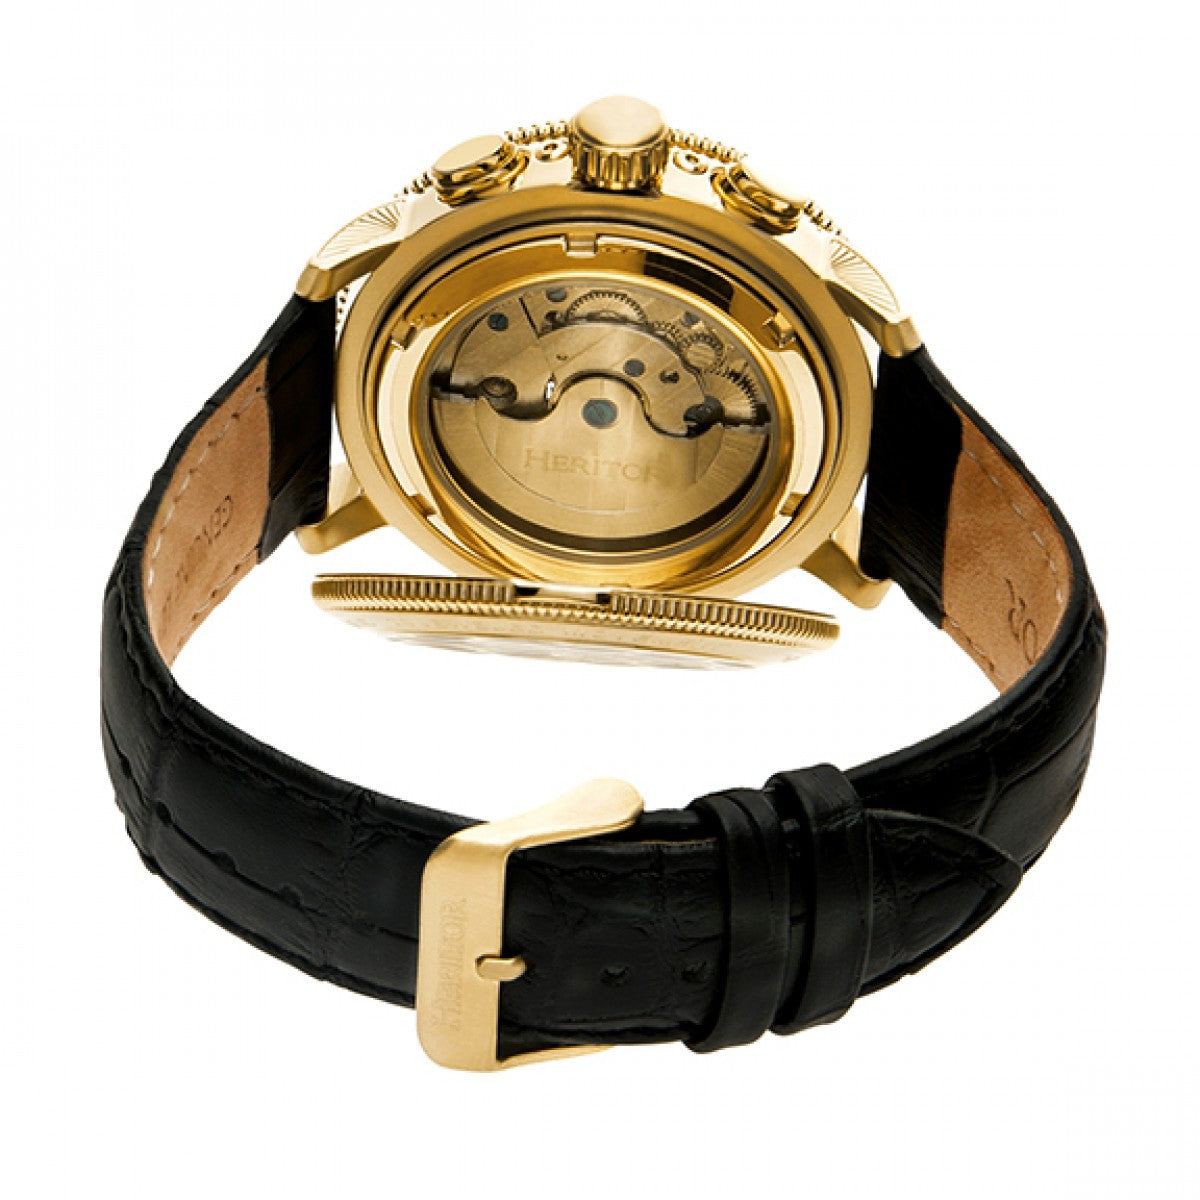 Heritor Automatic Aura Men's Semi-Skeleton Leather-Band Watch - Gold/White - HERHR3505